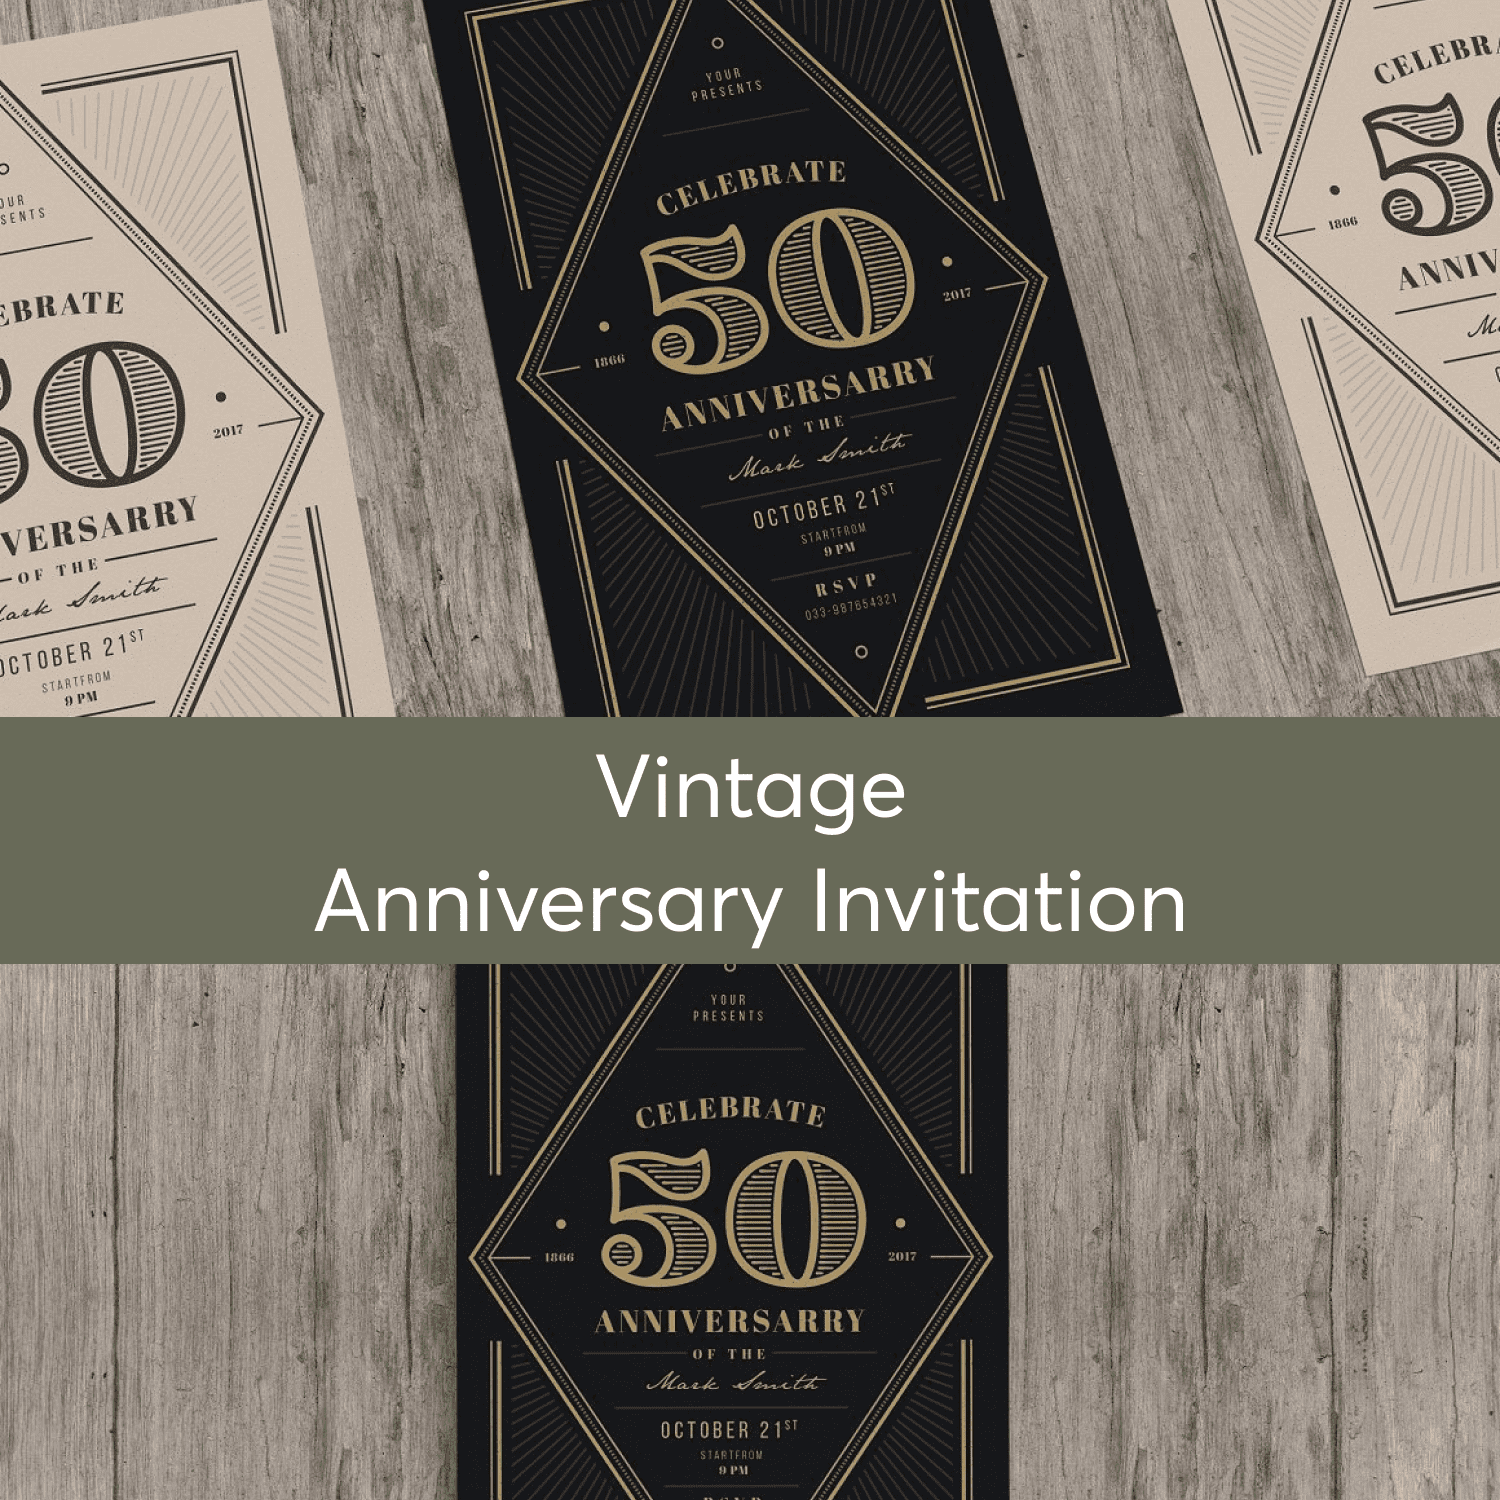 Vintage Anniversary Invitation cover image.